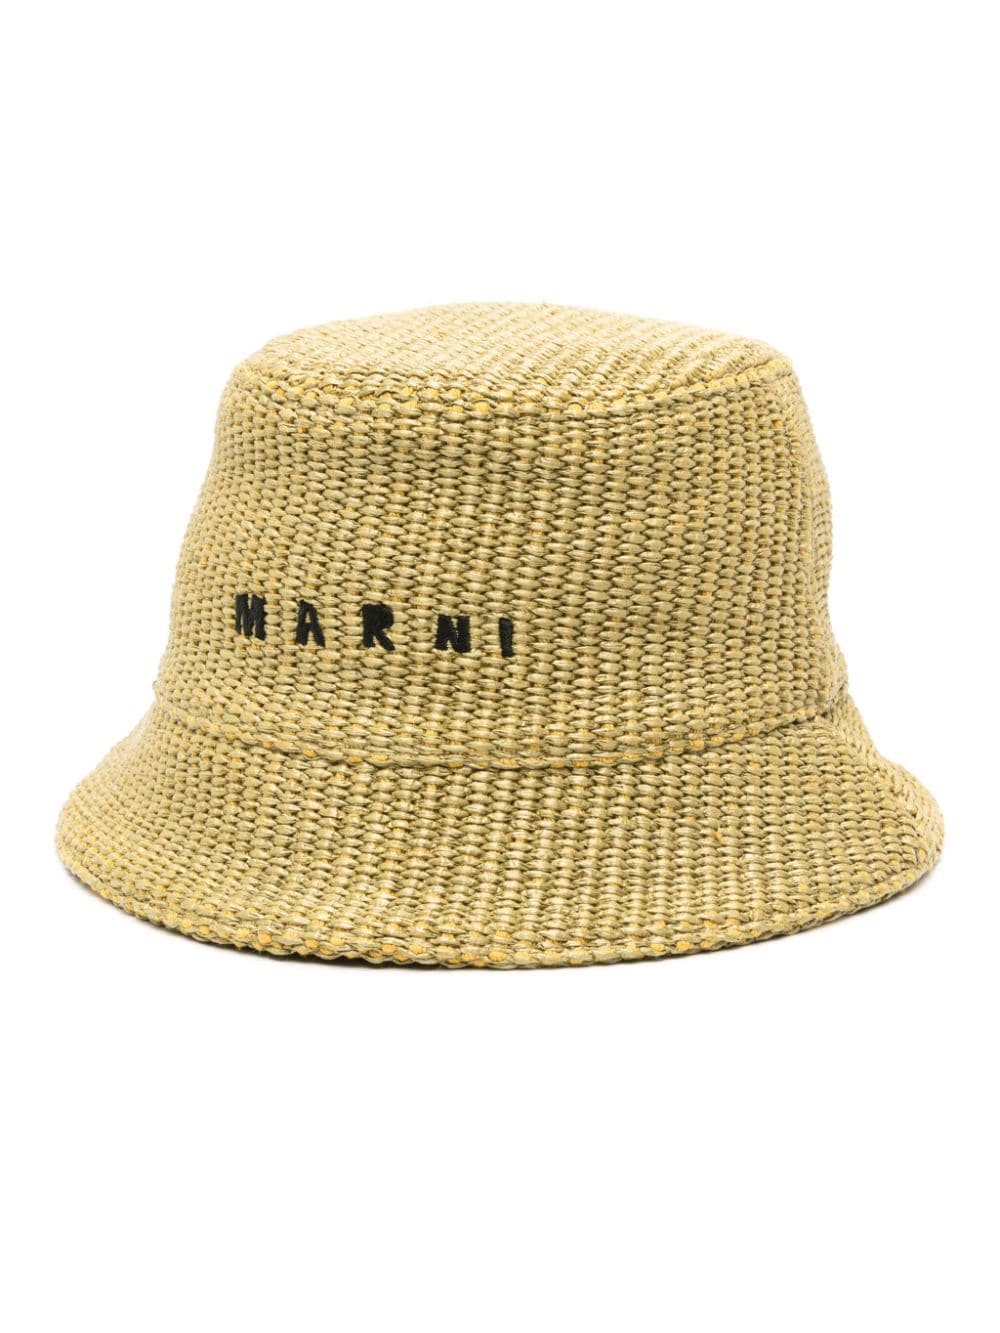 Logo-embroidered sun hat<BR/><BR/><BR/>